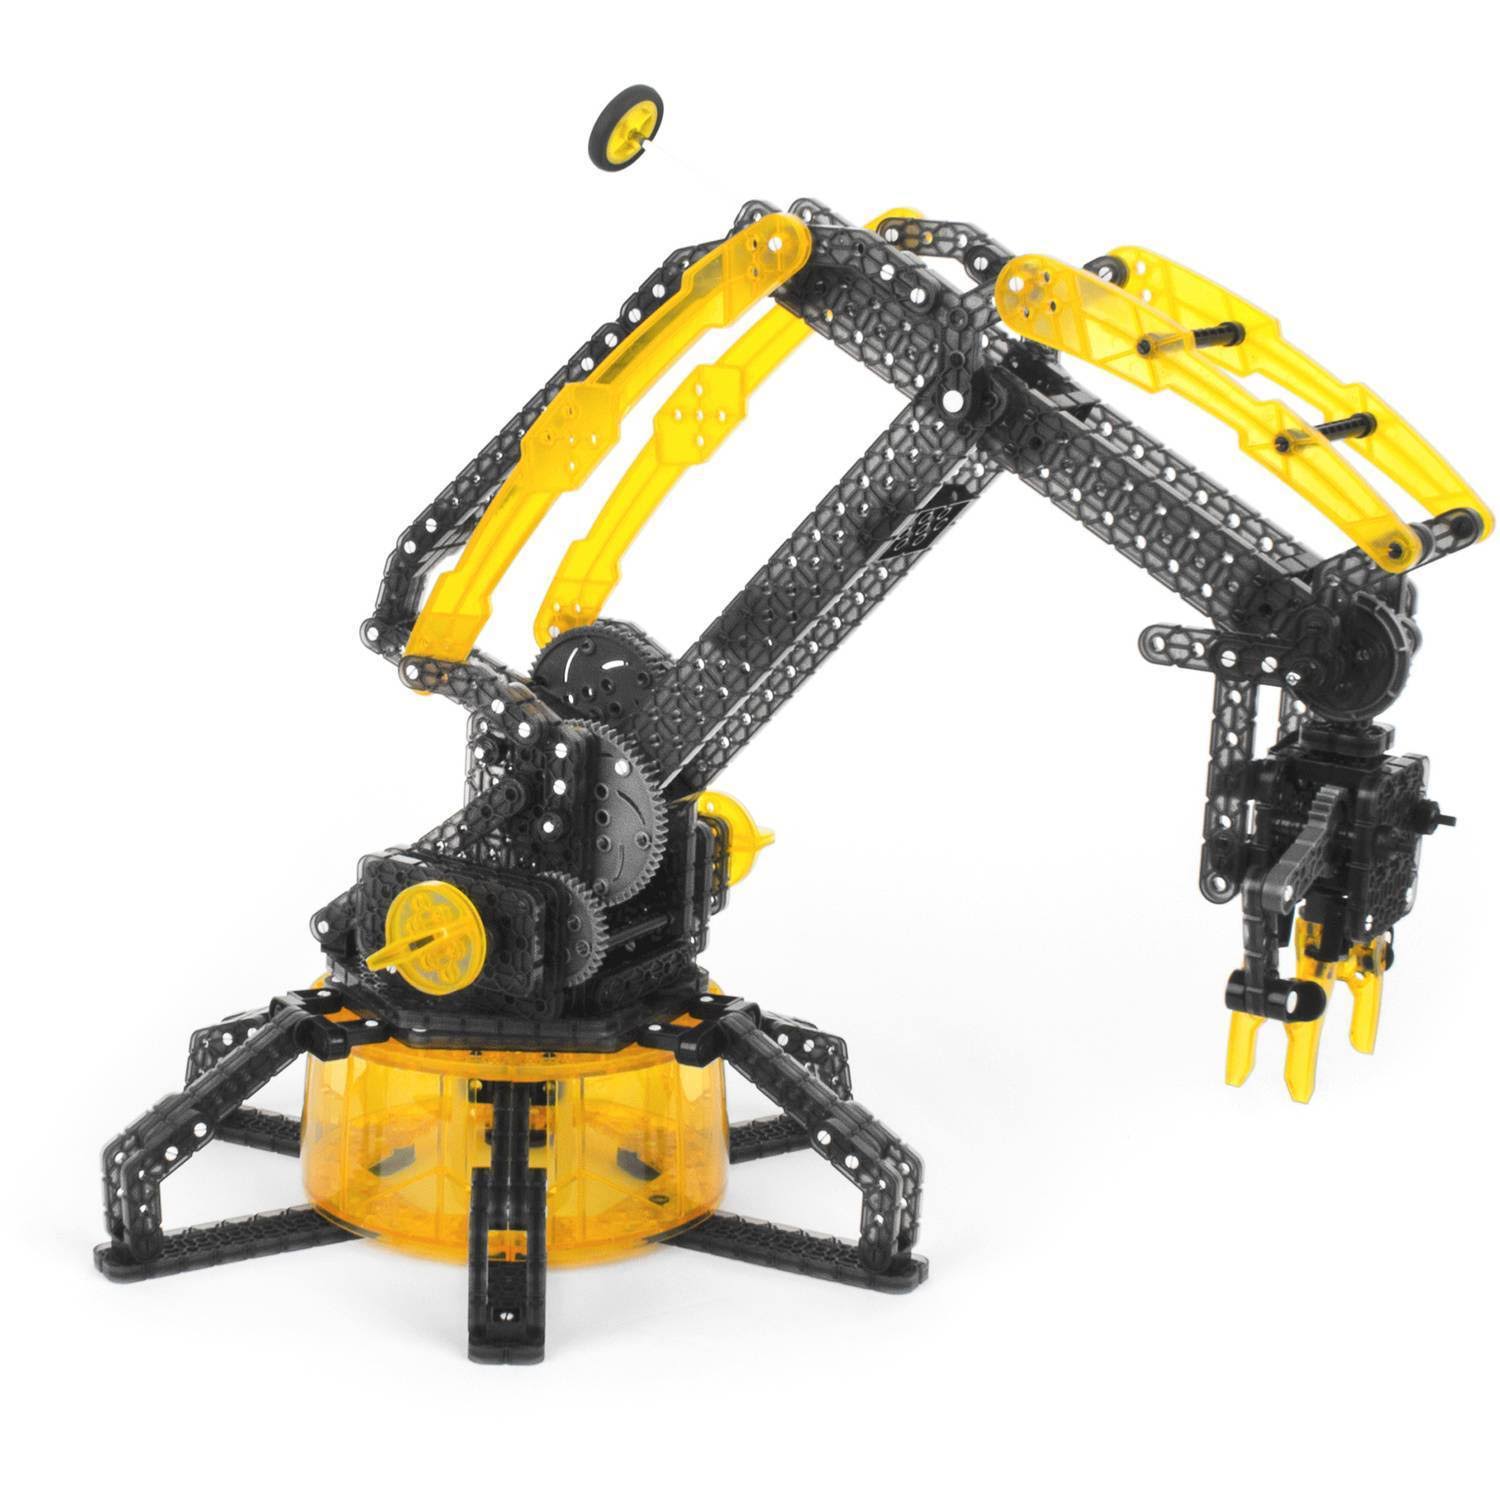 Hexbug 4064202 Vex Robotics Robotic Arm - 7.9cm